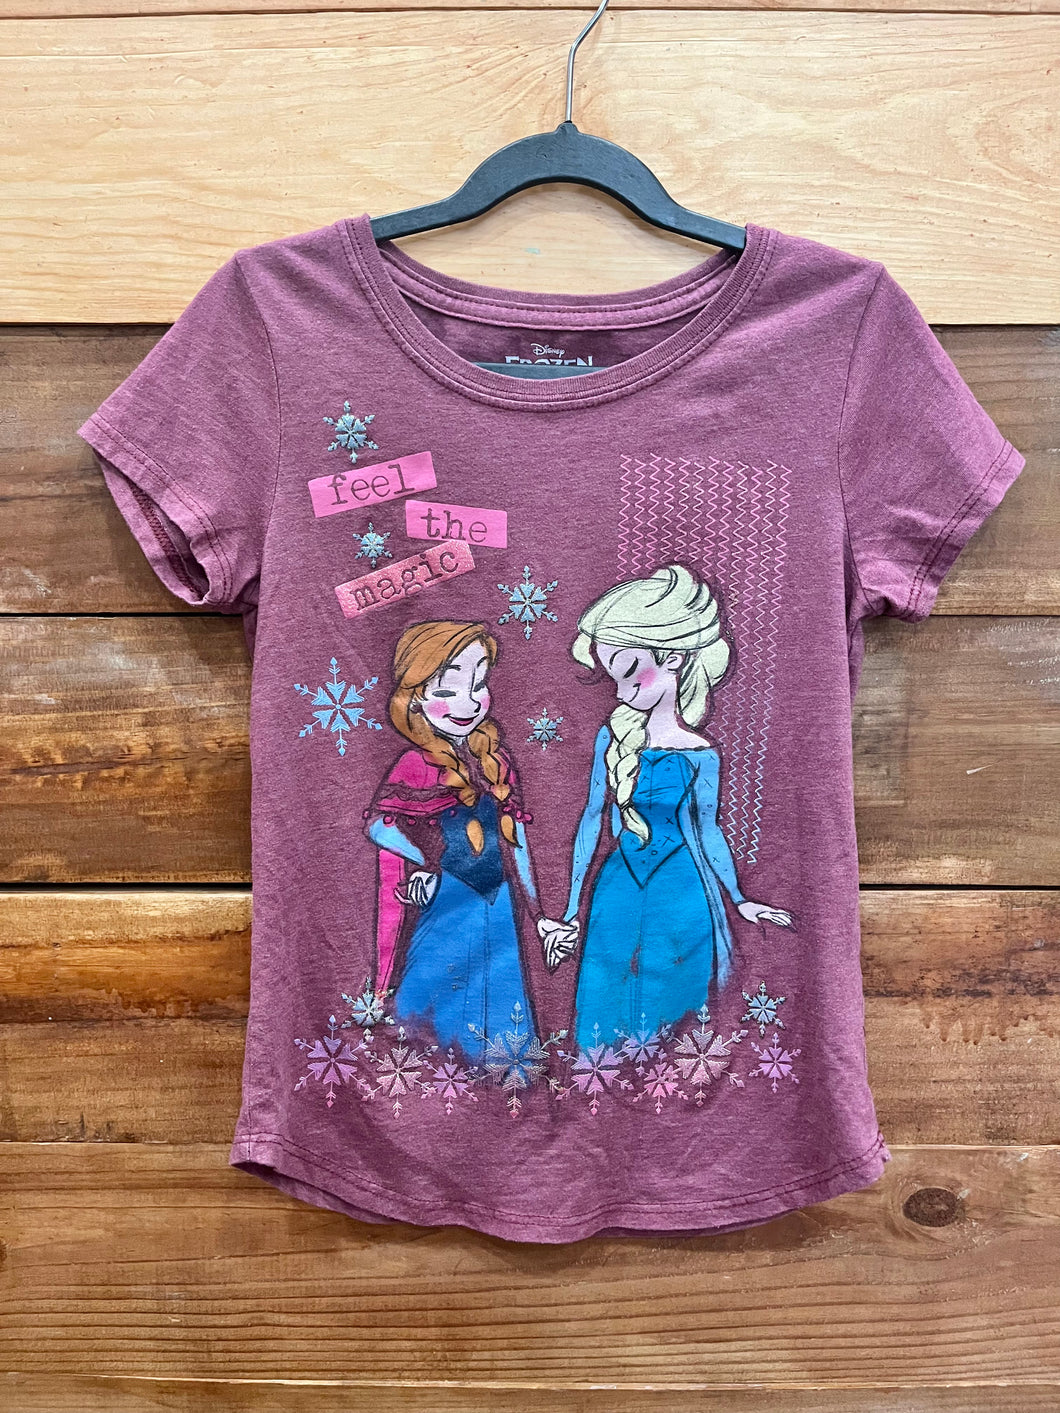 Disney Frozen Shirt Size 7/8